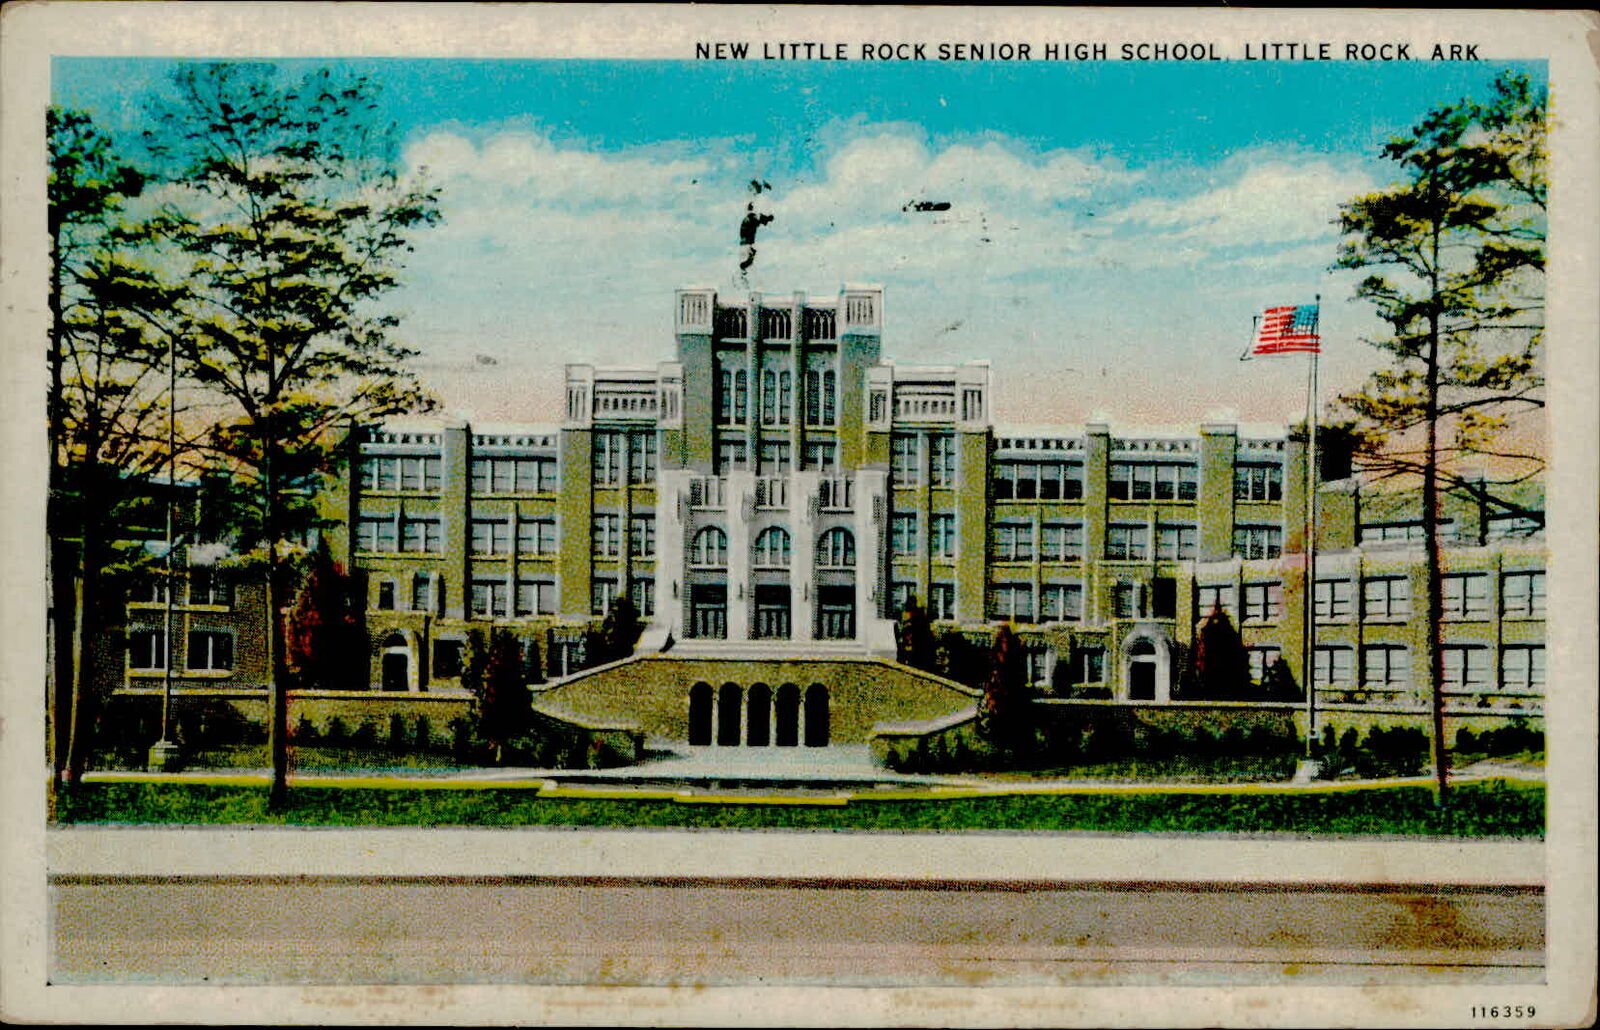 Postcard: NEW LITTLE ROCK SENIOR HIGH SCHOOL LITTLE ROCK, ARK. 116359